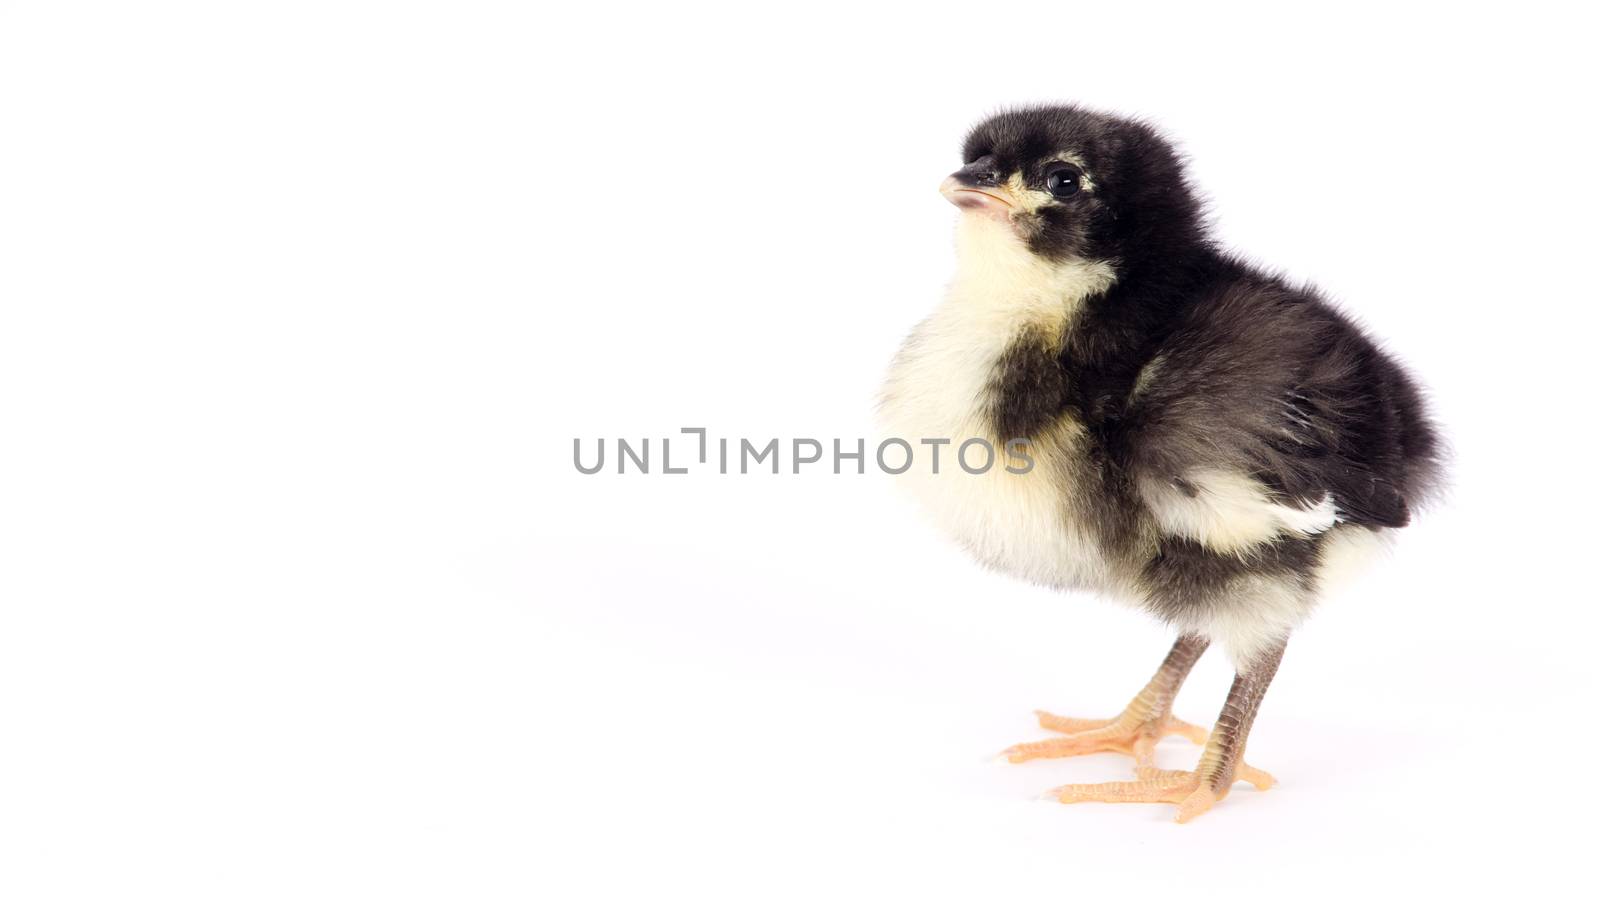 Baby Chick Newborn Farm Chicken Standing White Australorp Variety by ChrisBoswell